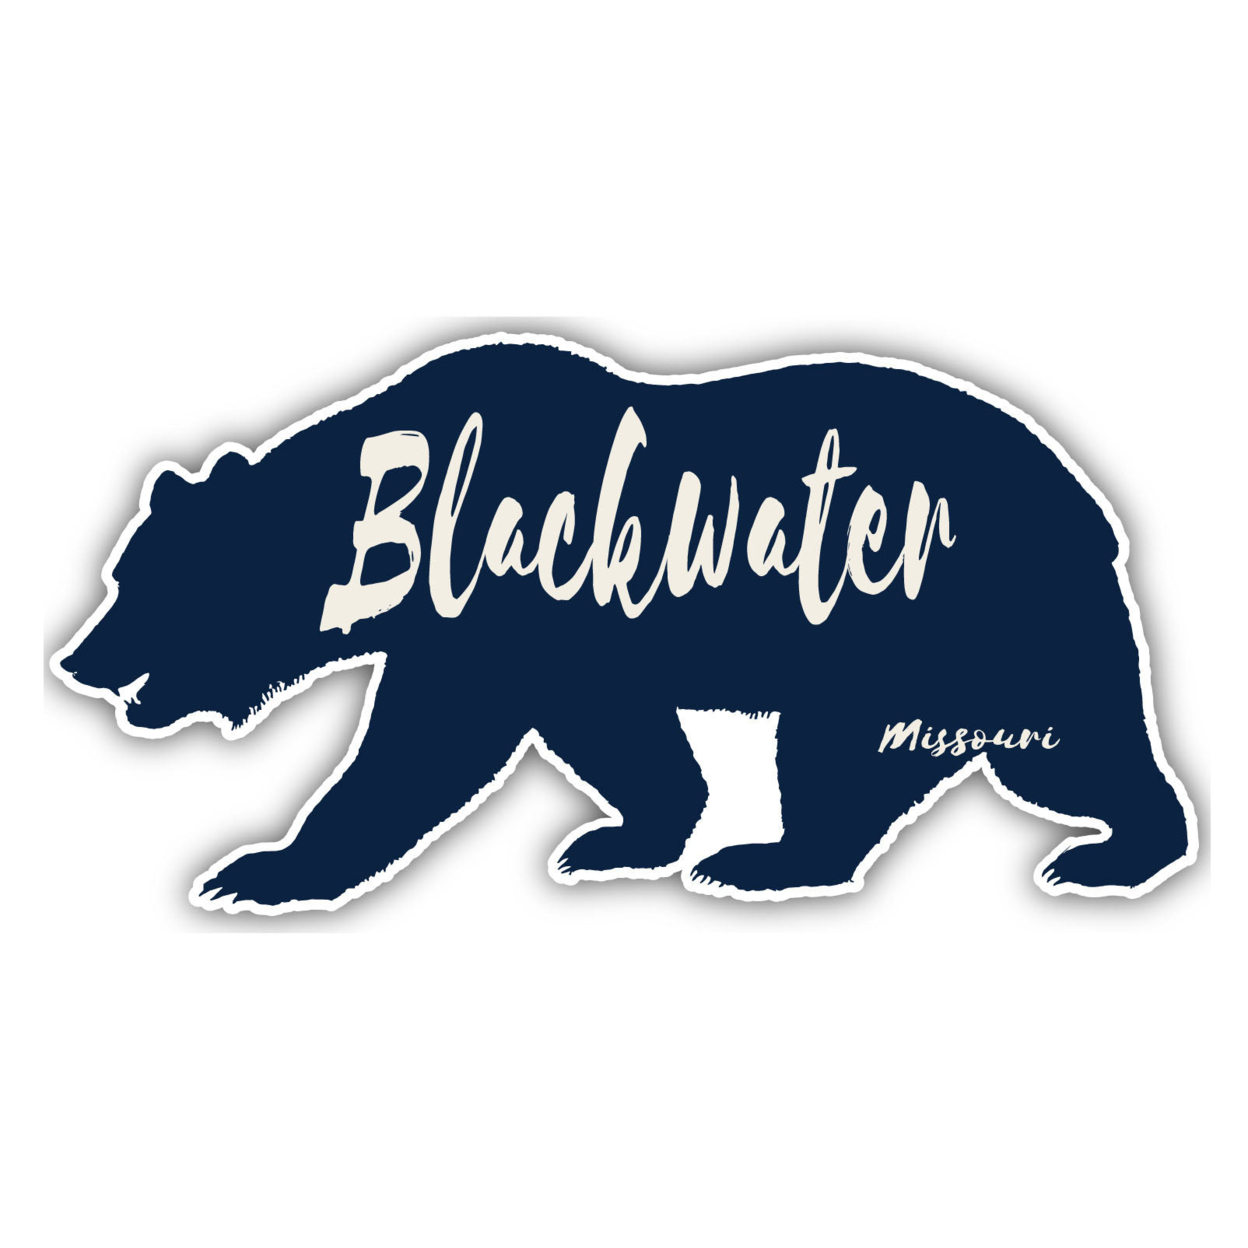 Blackwater Missouri Souvenir Decorative Stickers (Choose Theme And Size) - 4-Pack, 4-Inch, Bear